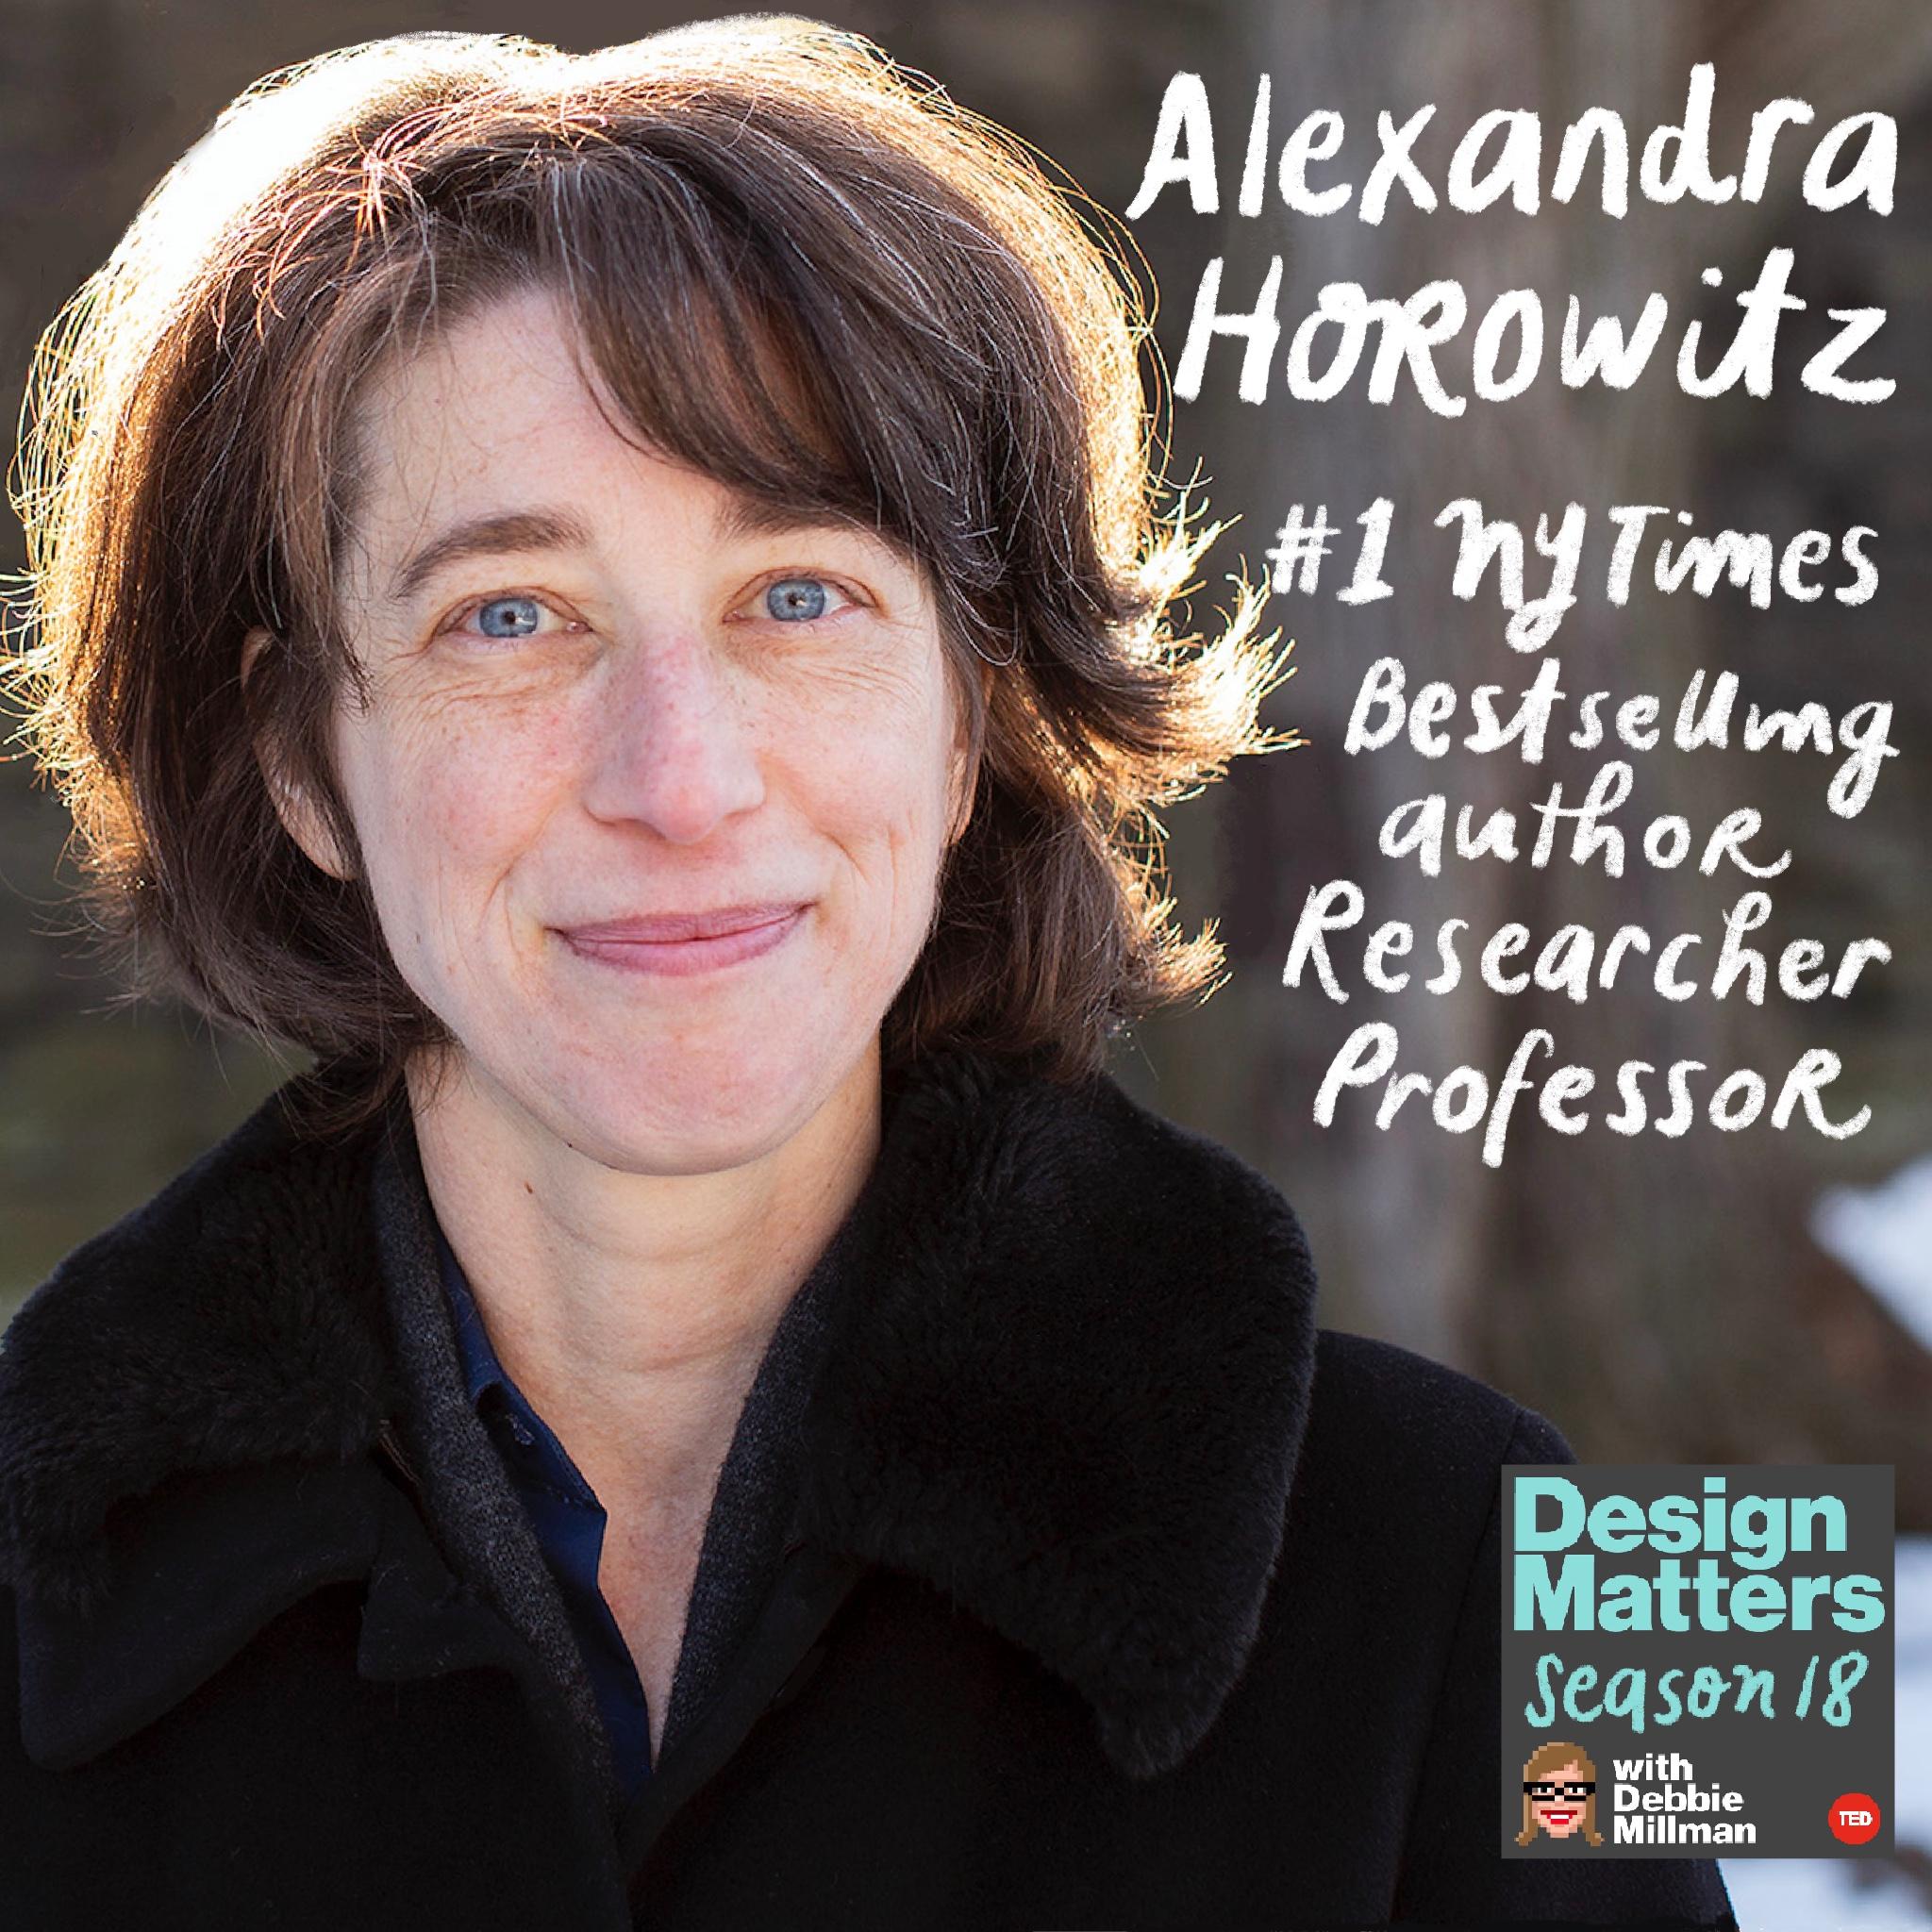 Thumbnail for "Alexandra Horowitz".